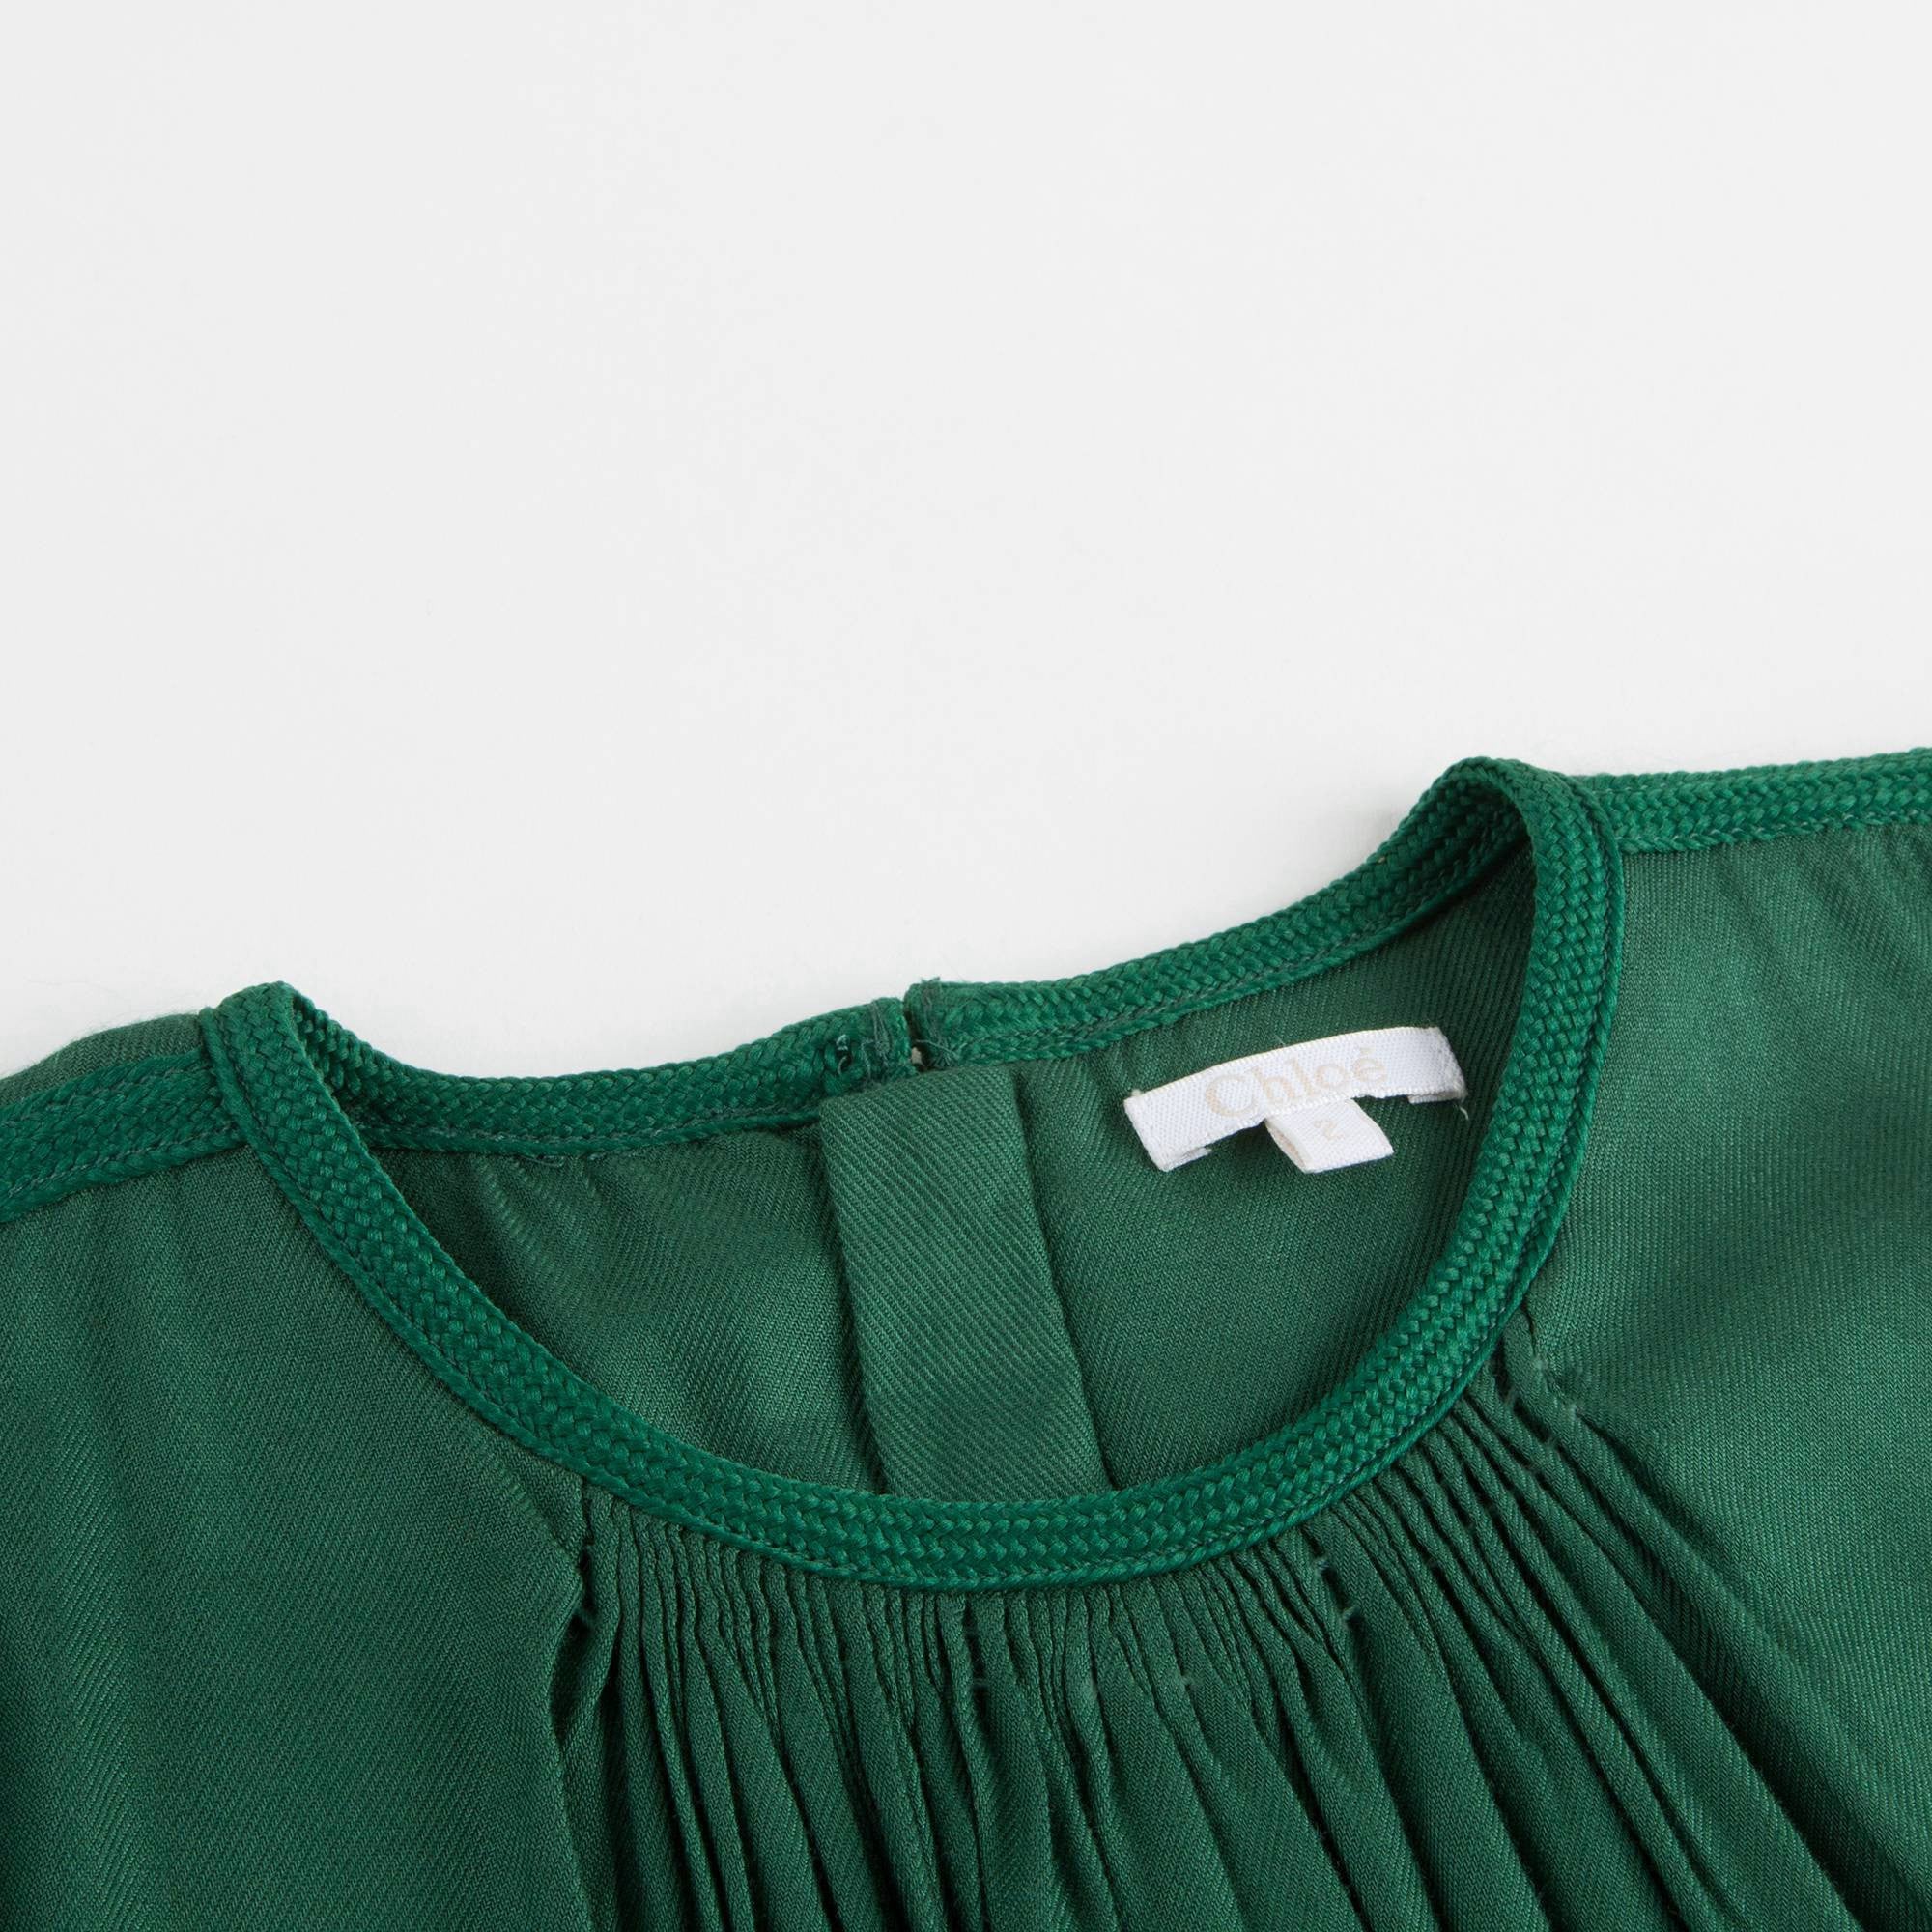 Baby Girls Green Dress